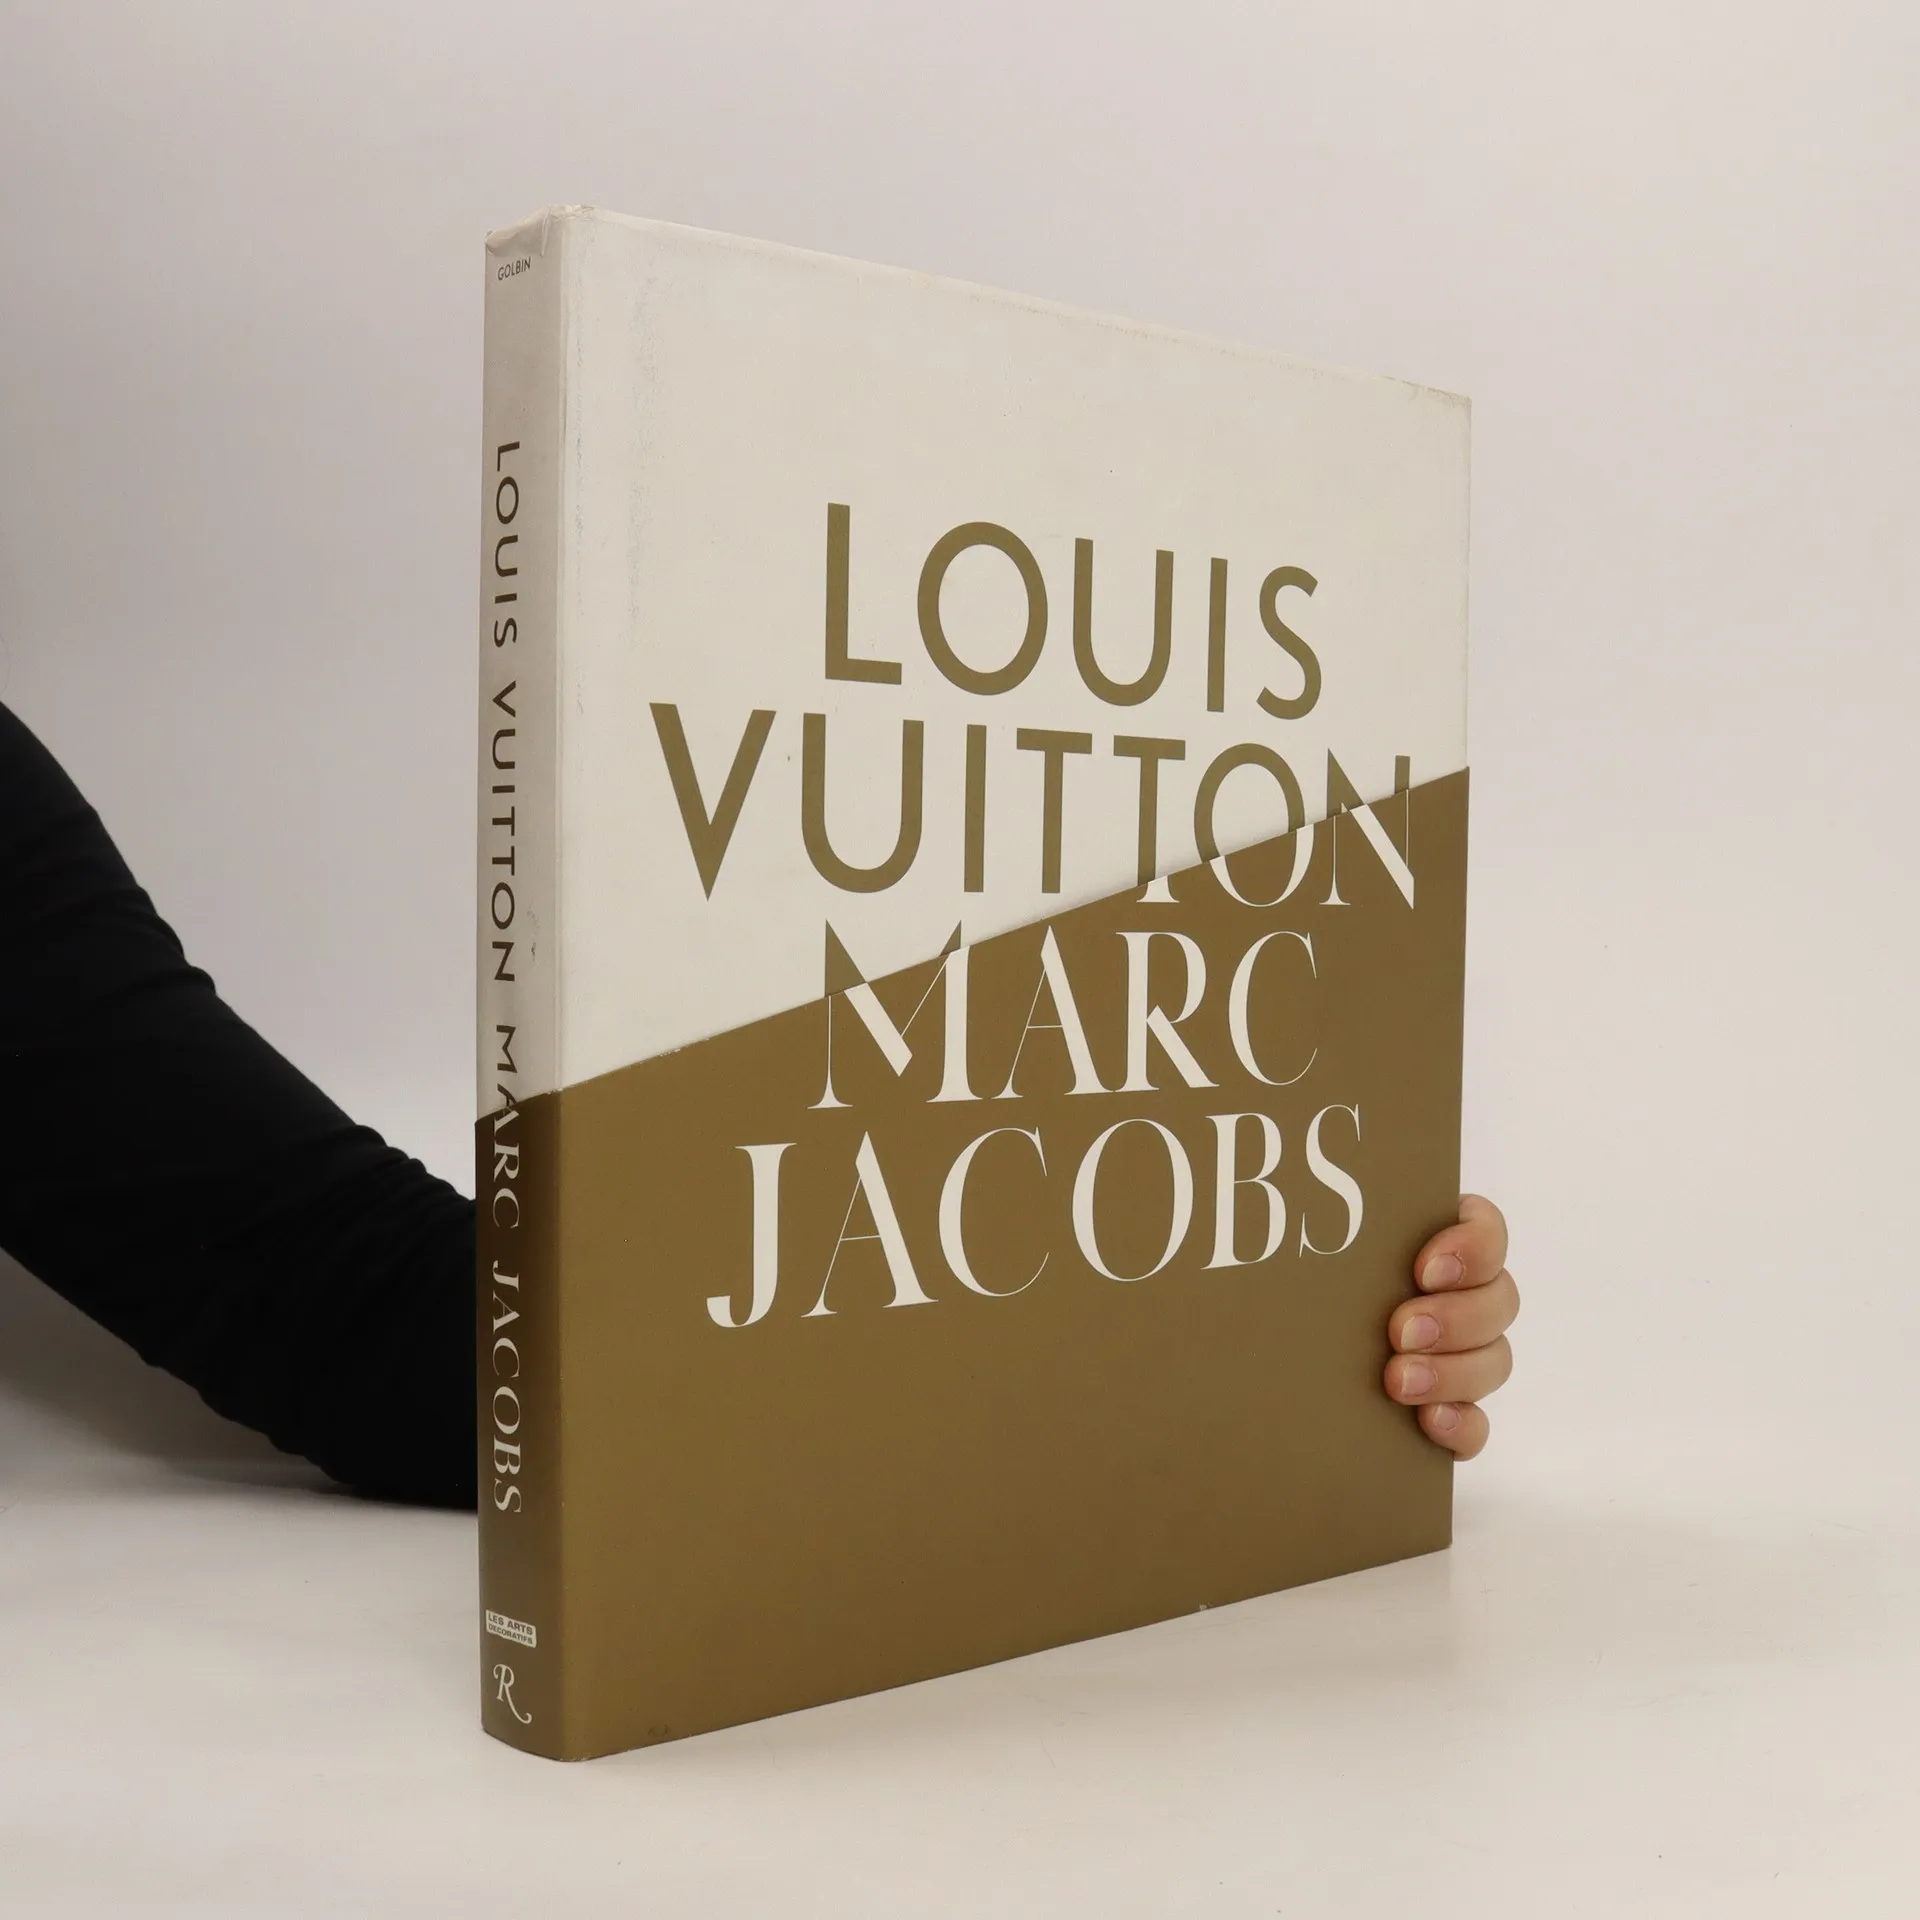 Louis Vuitton Marc Jacobs Hardcover Book- By Pamela Golbin Limited